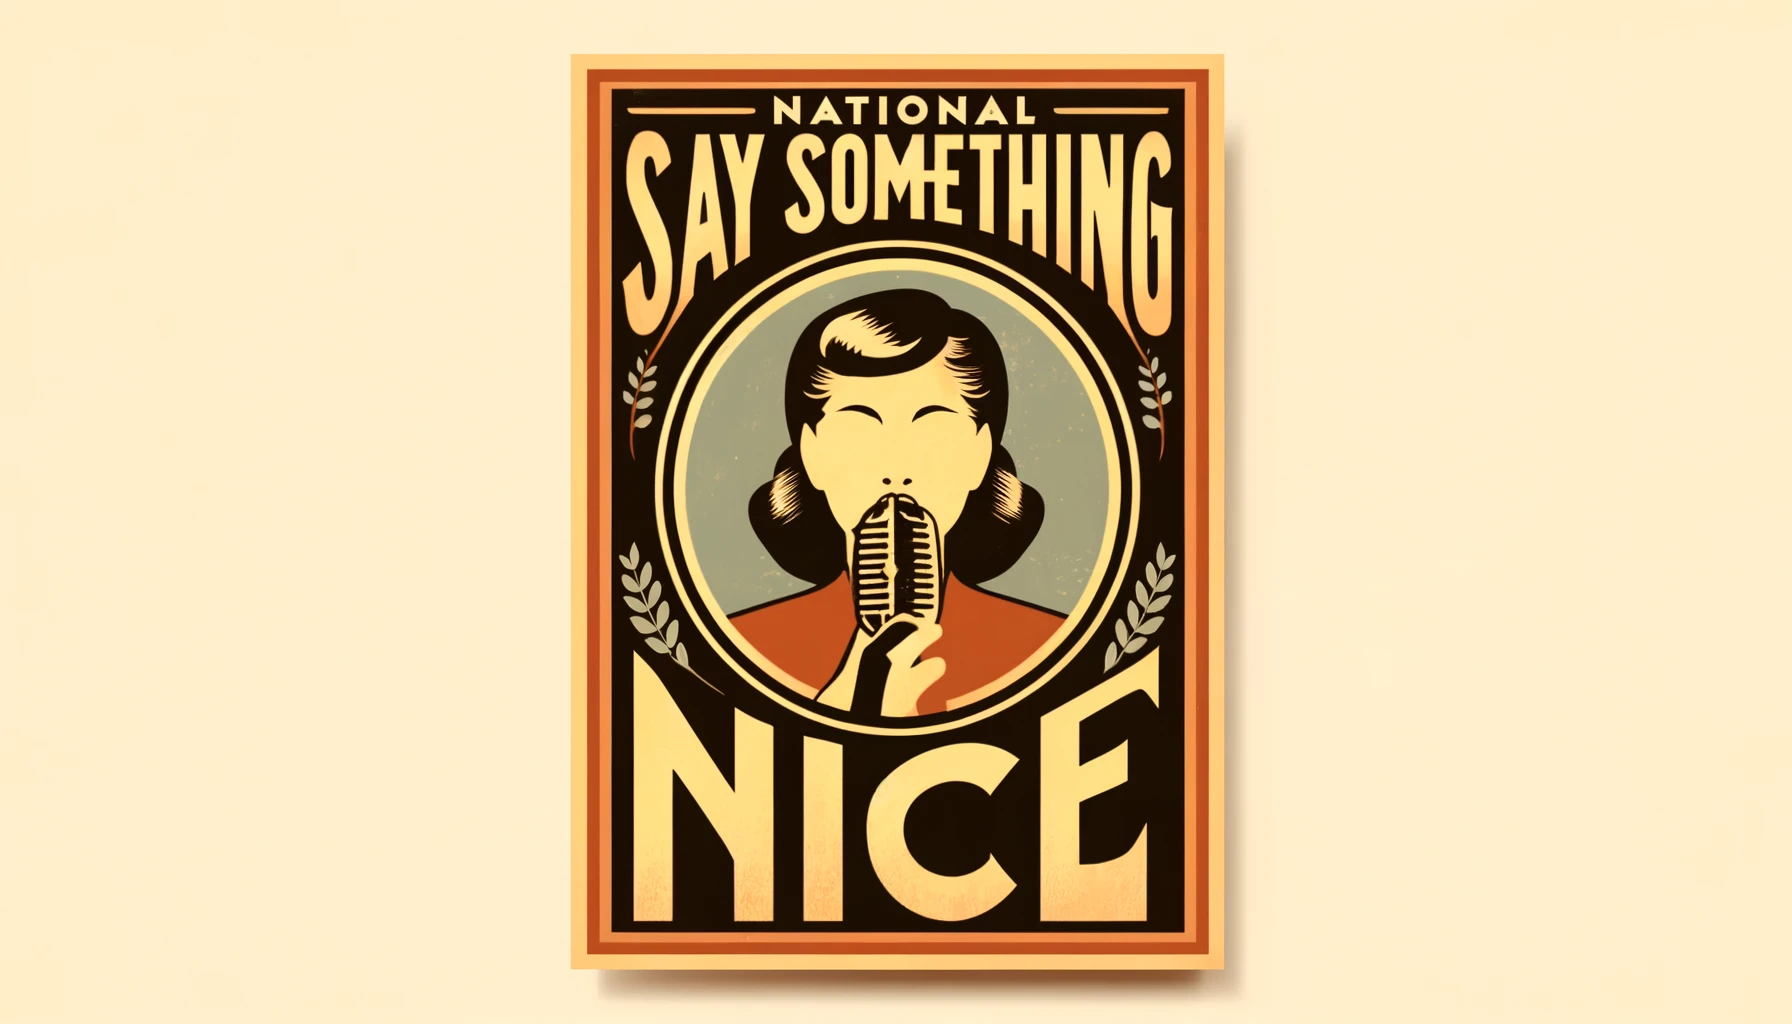 National Say Something Nice Day